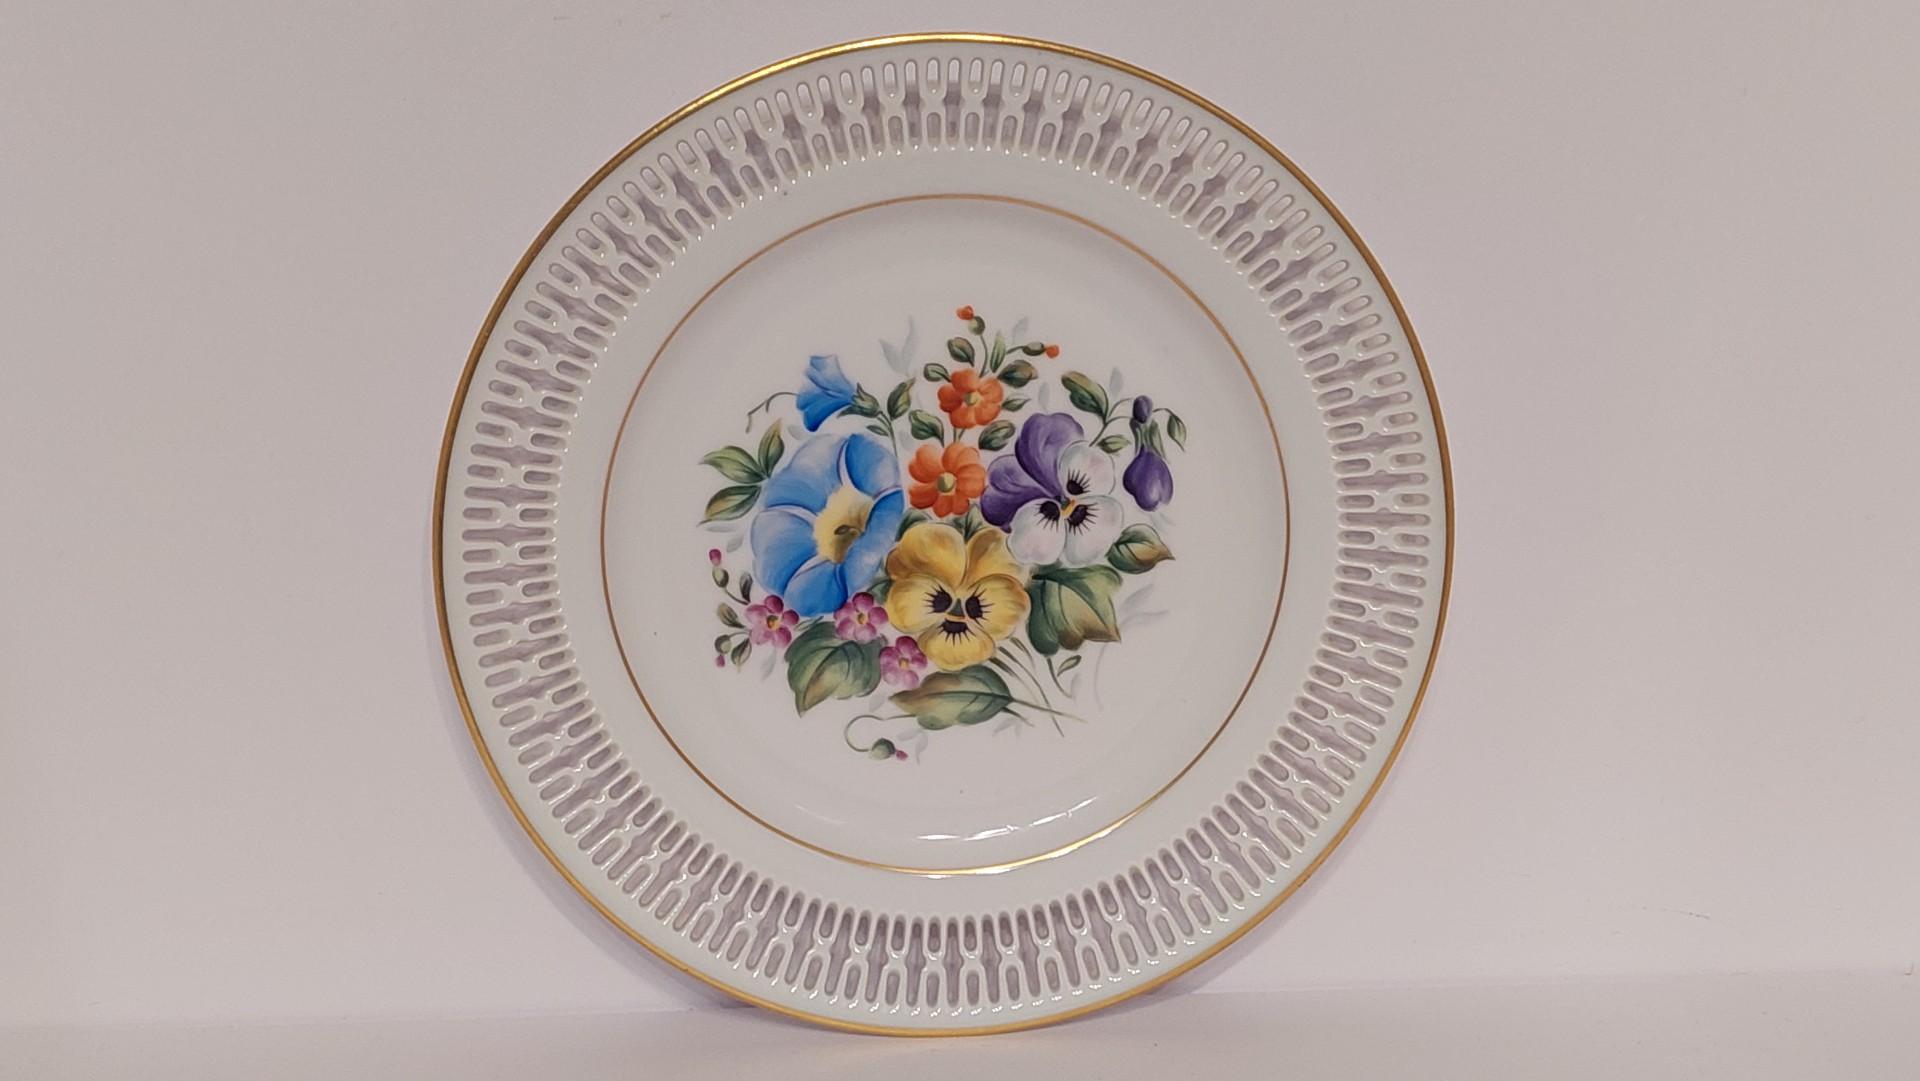 Bing Grondahl Cpoenhagen porceliano lėkštė ~ 20,3cm